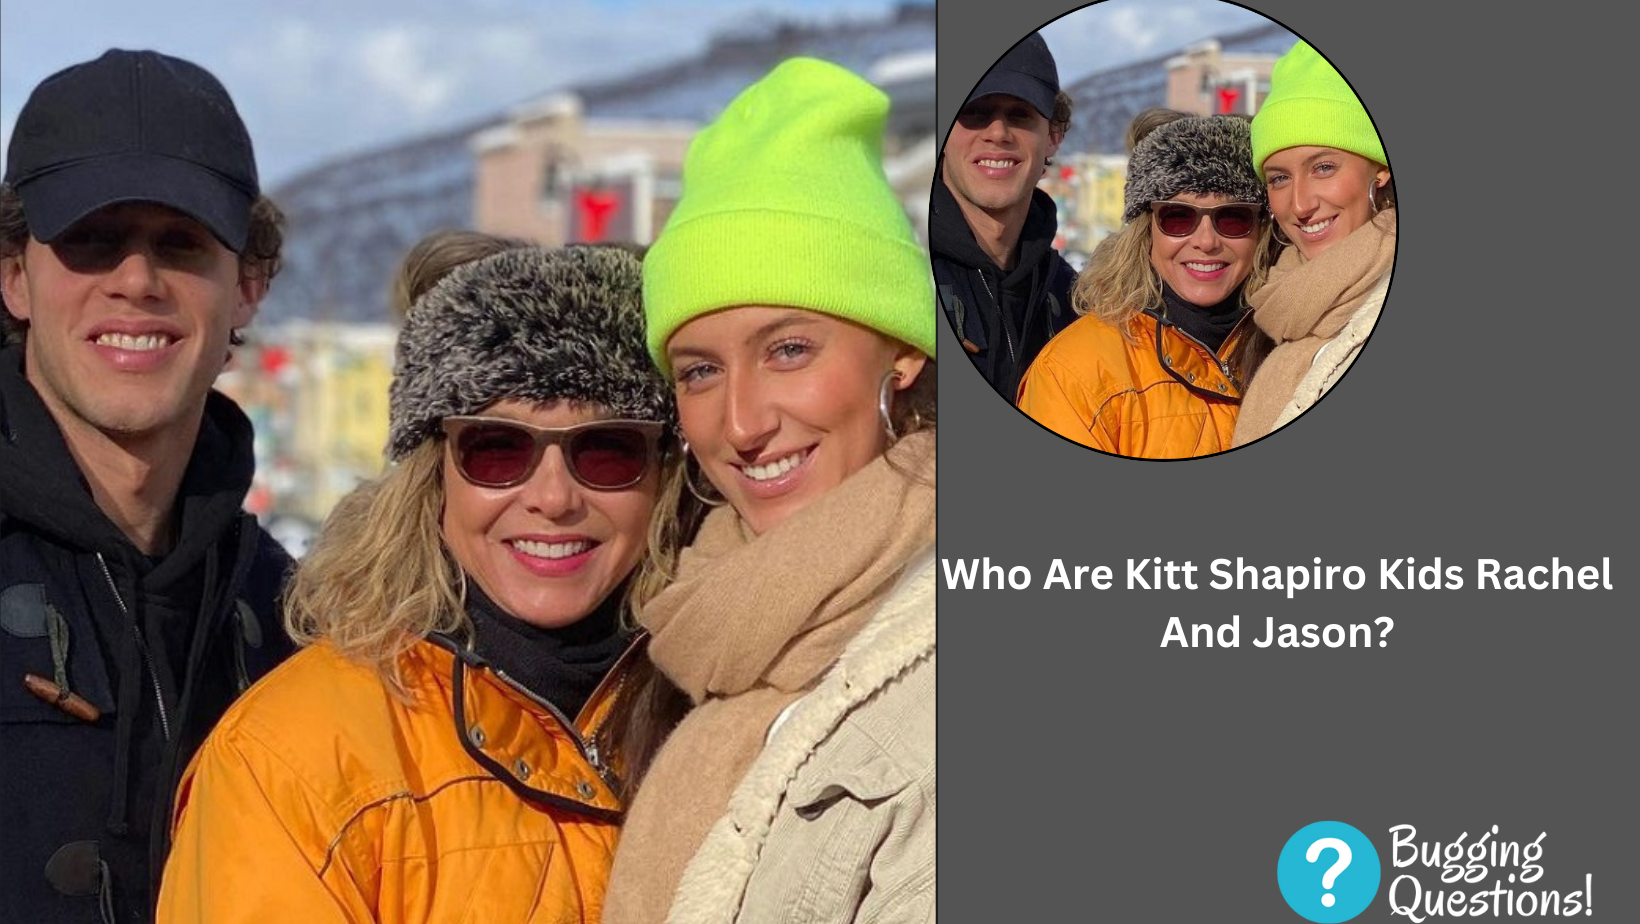 Who Are Kitt Shapiro Kids Rachel And Jason?